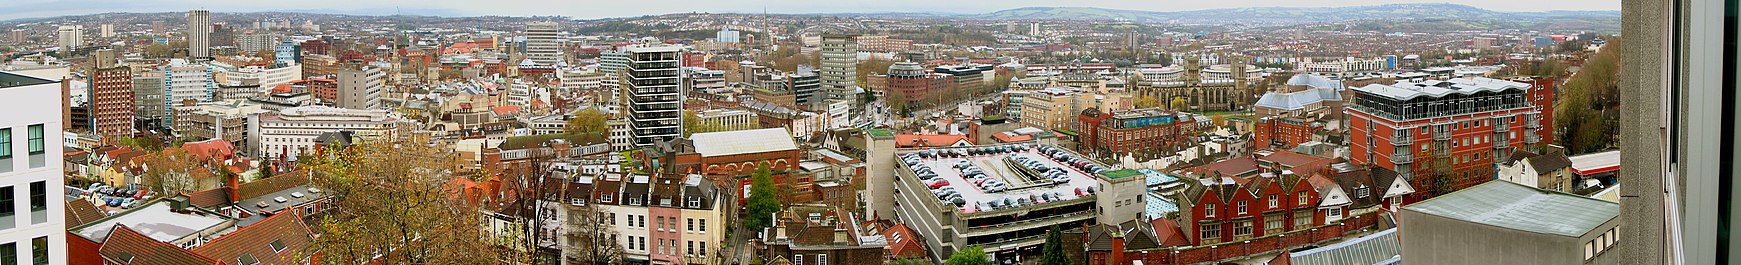 Panorama of Bristol.jpg